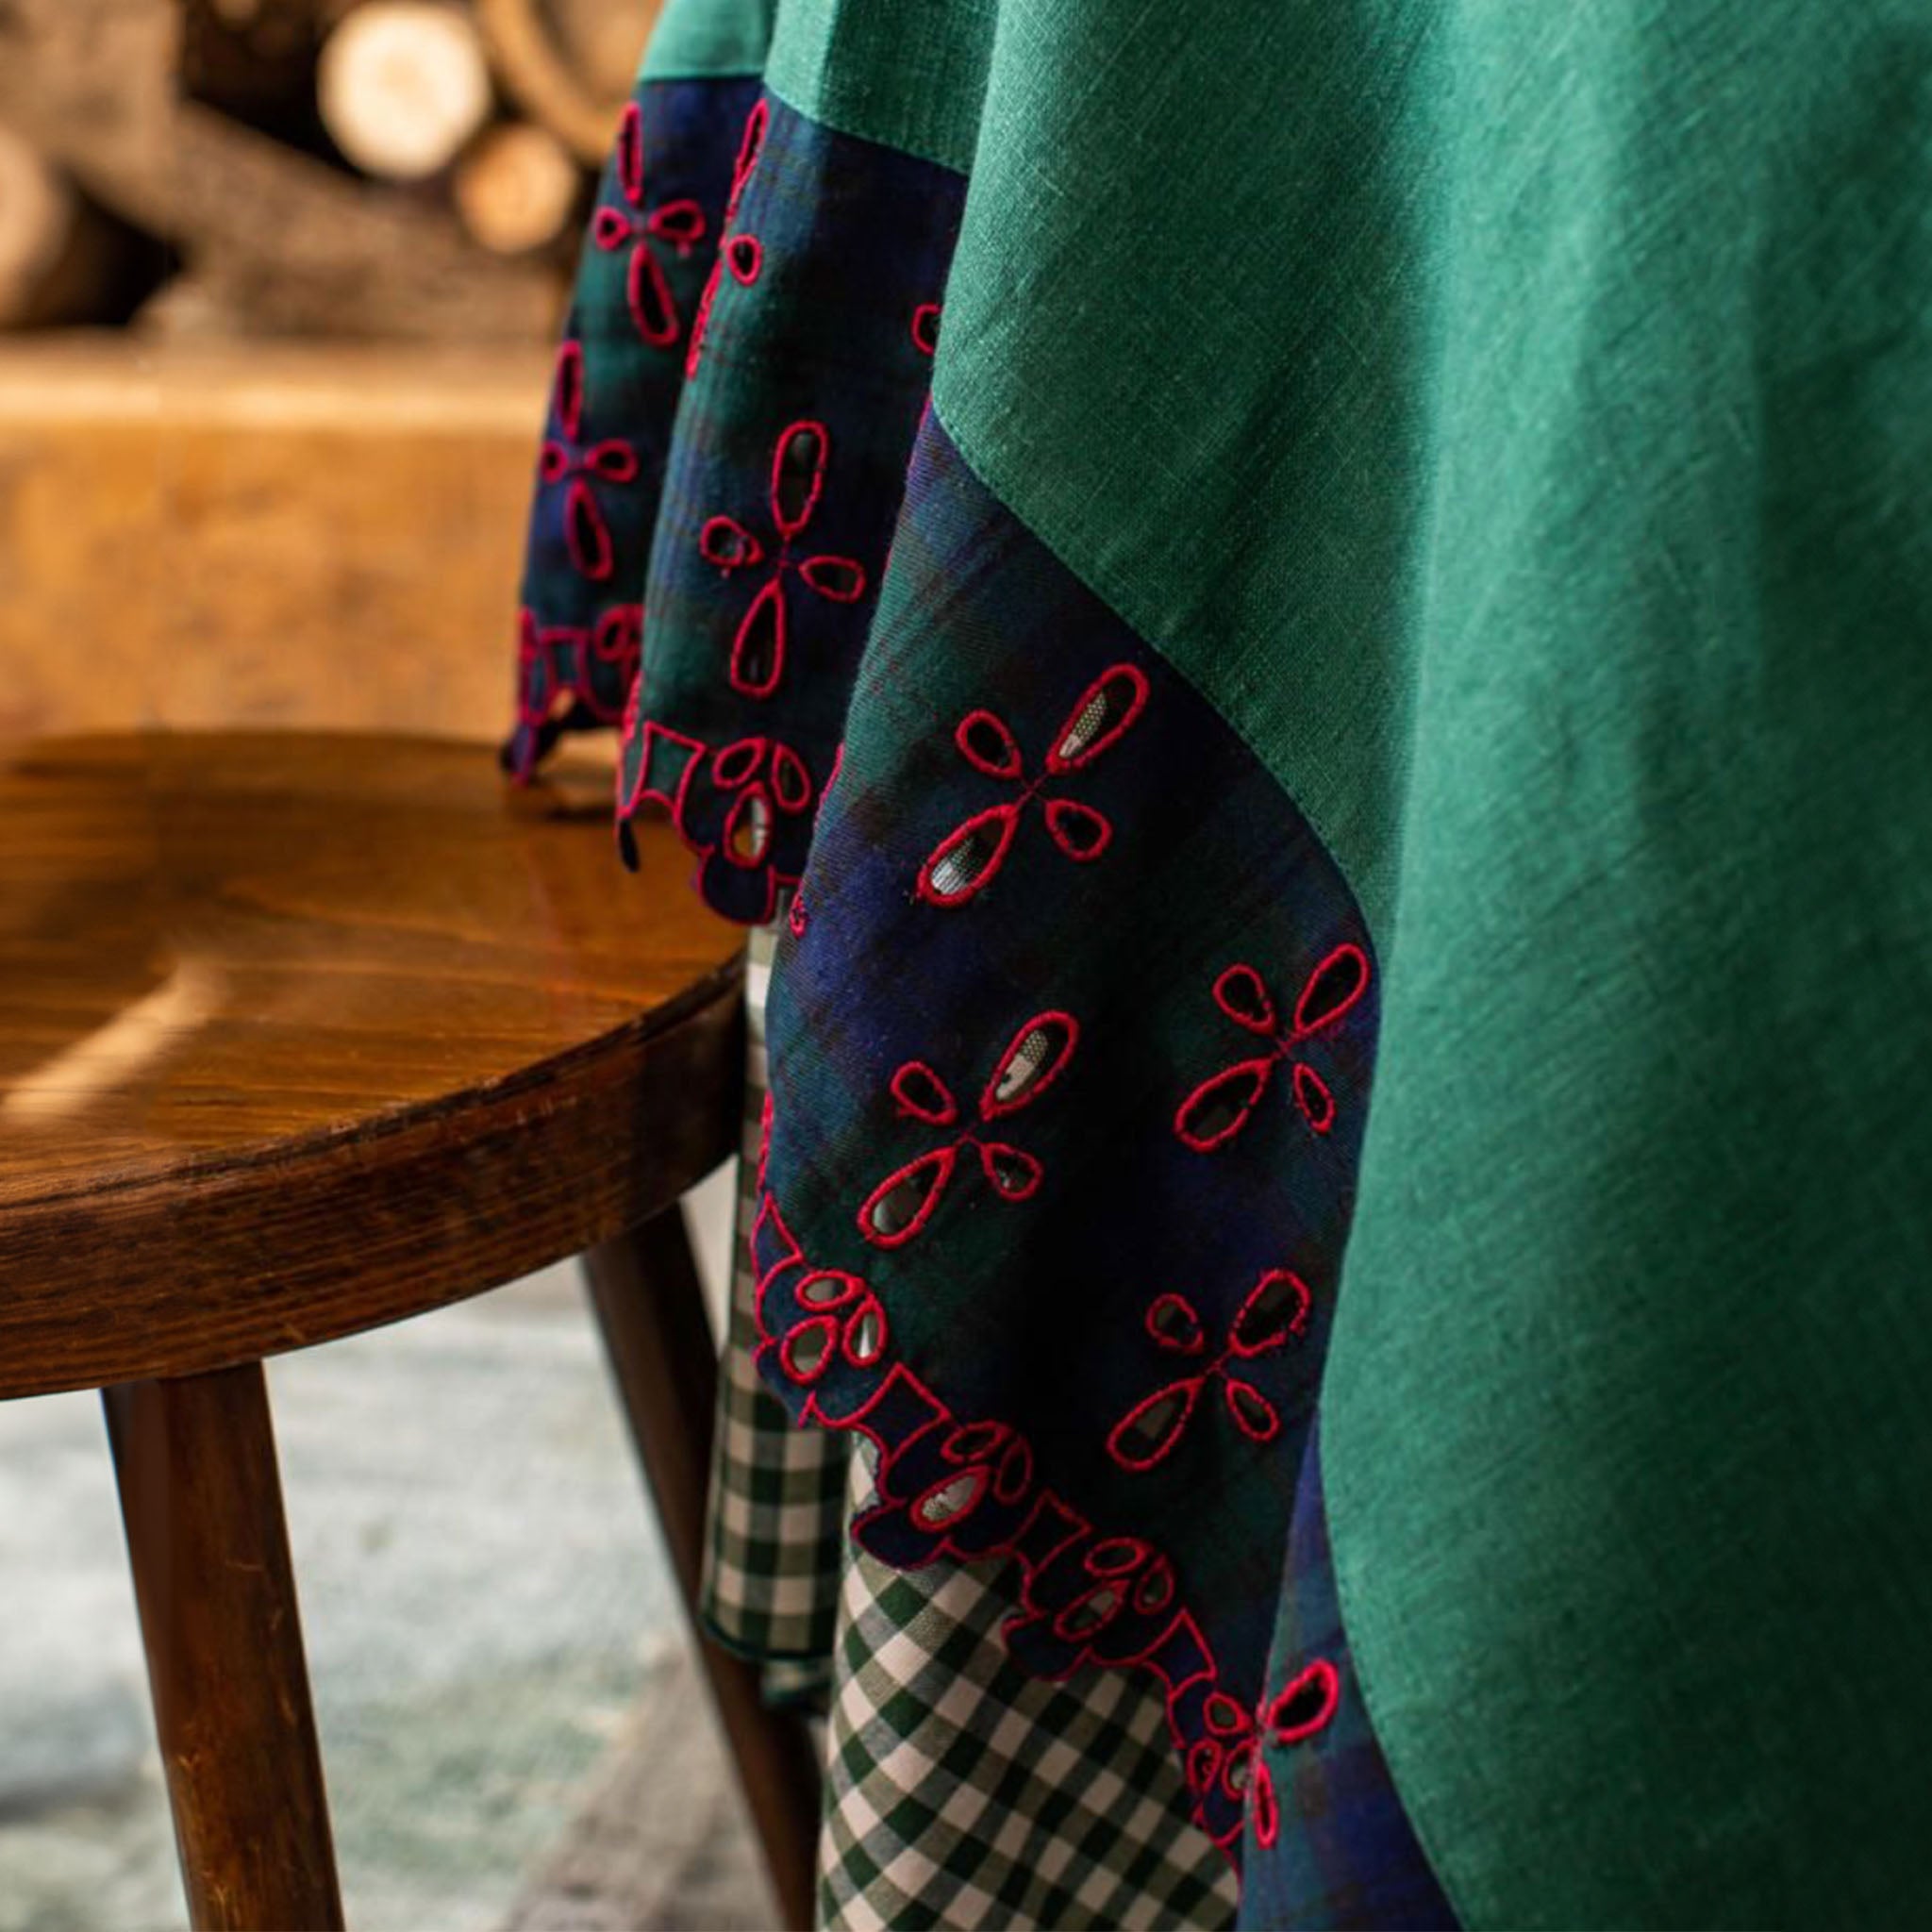 Amalfi Linen Tablecloth Bosco - Rosso - Scozzese - Blu 180 x 400 cm